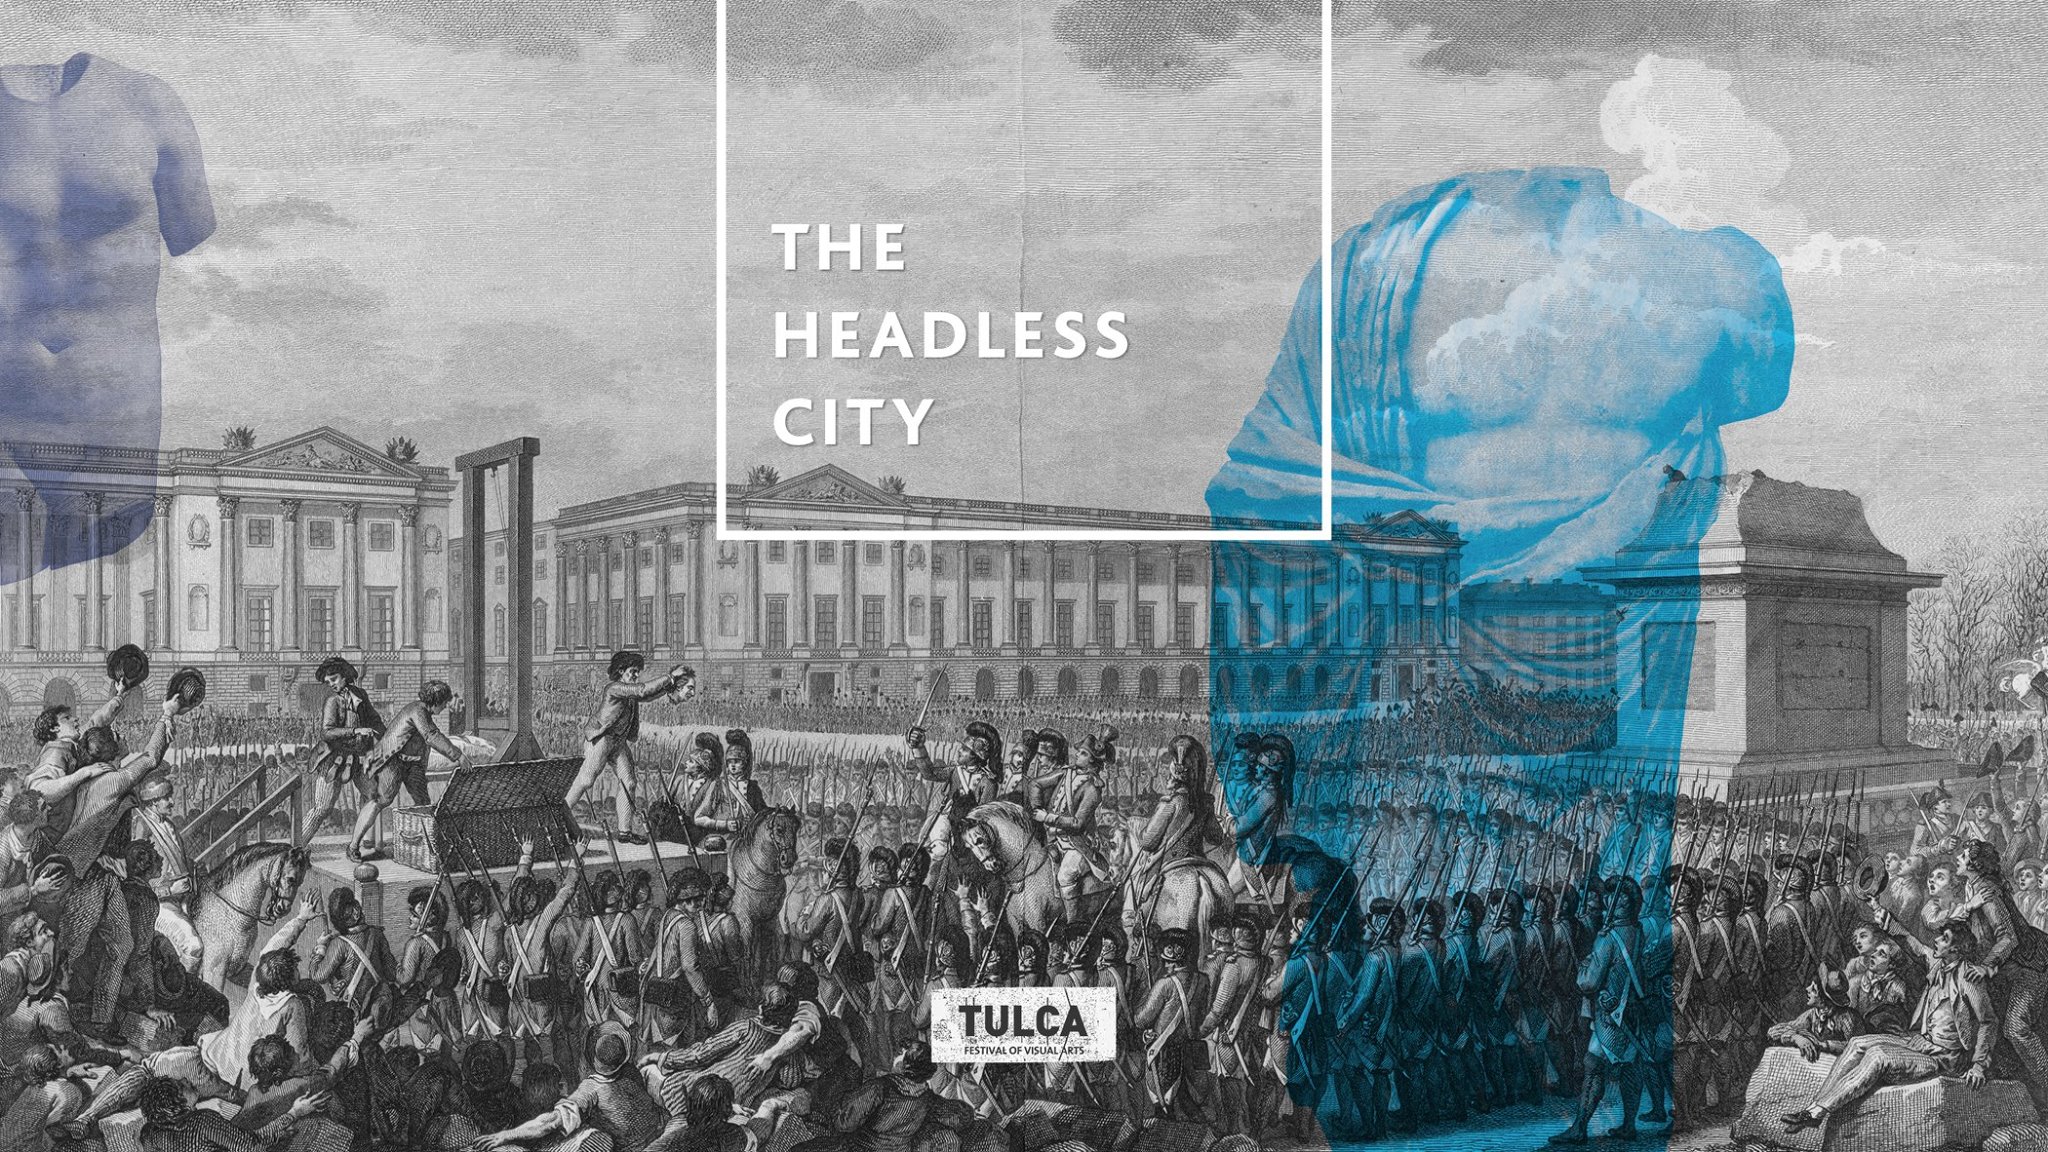 TULCA 2016: The Headless City